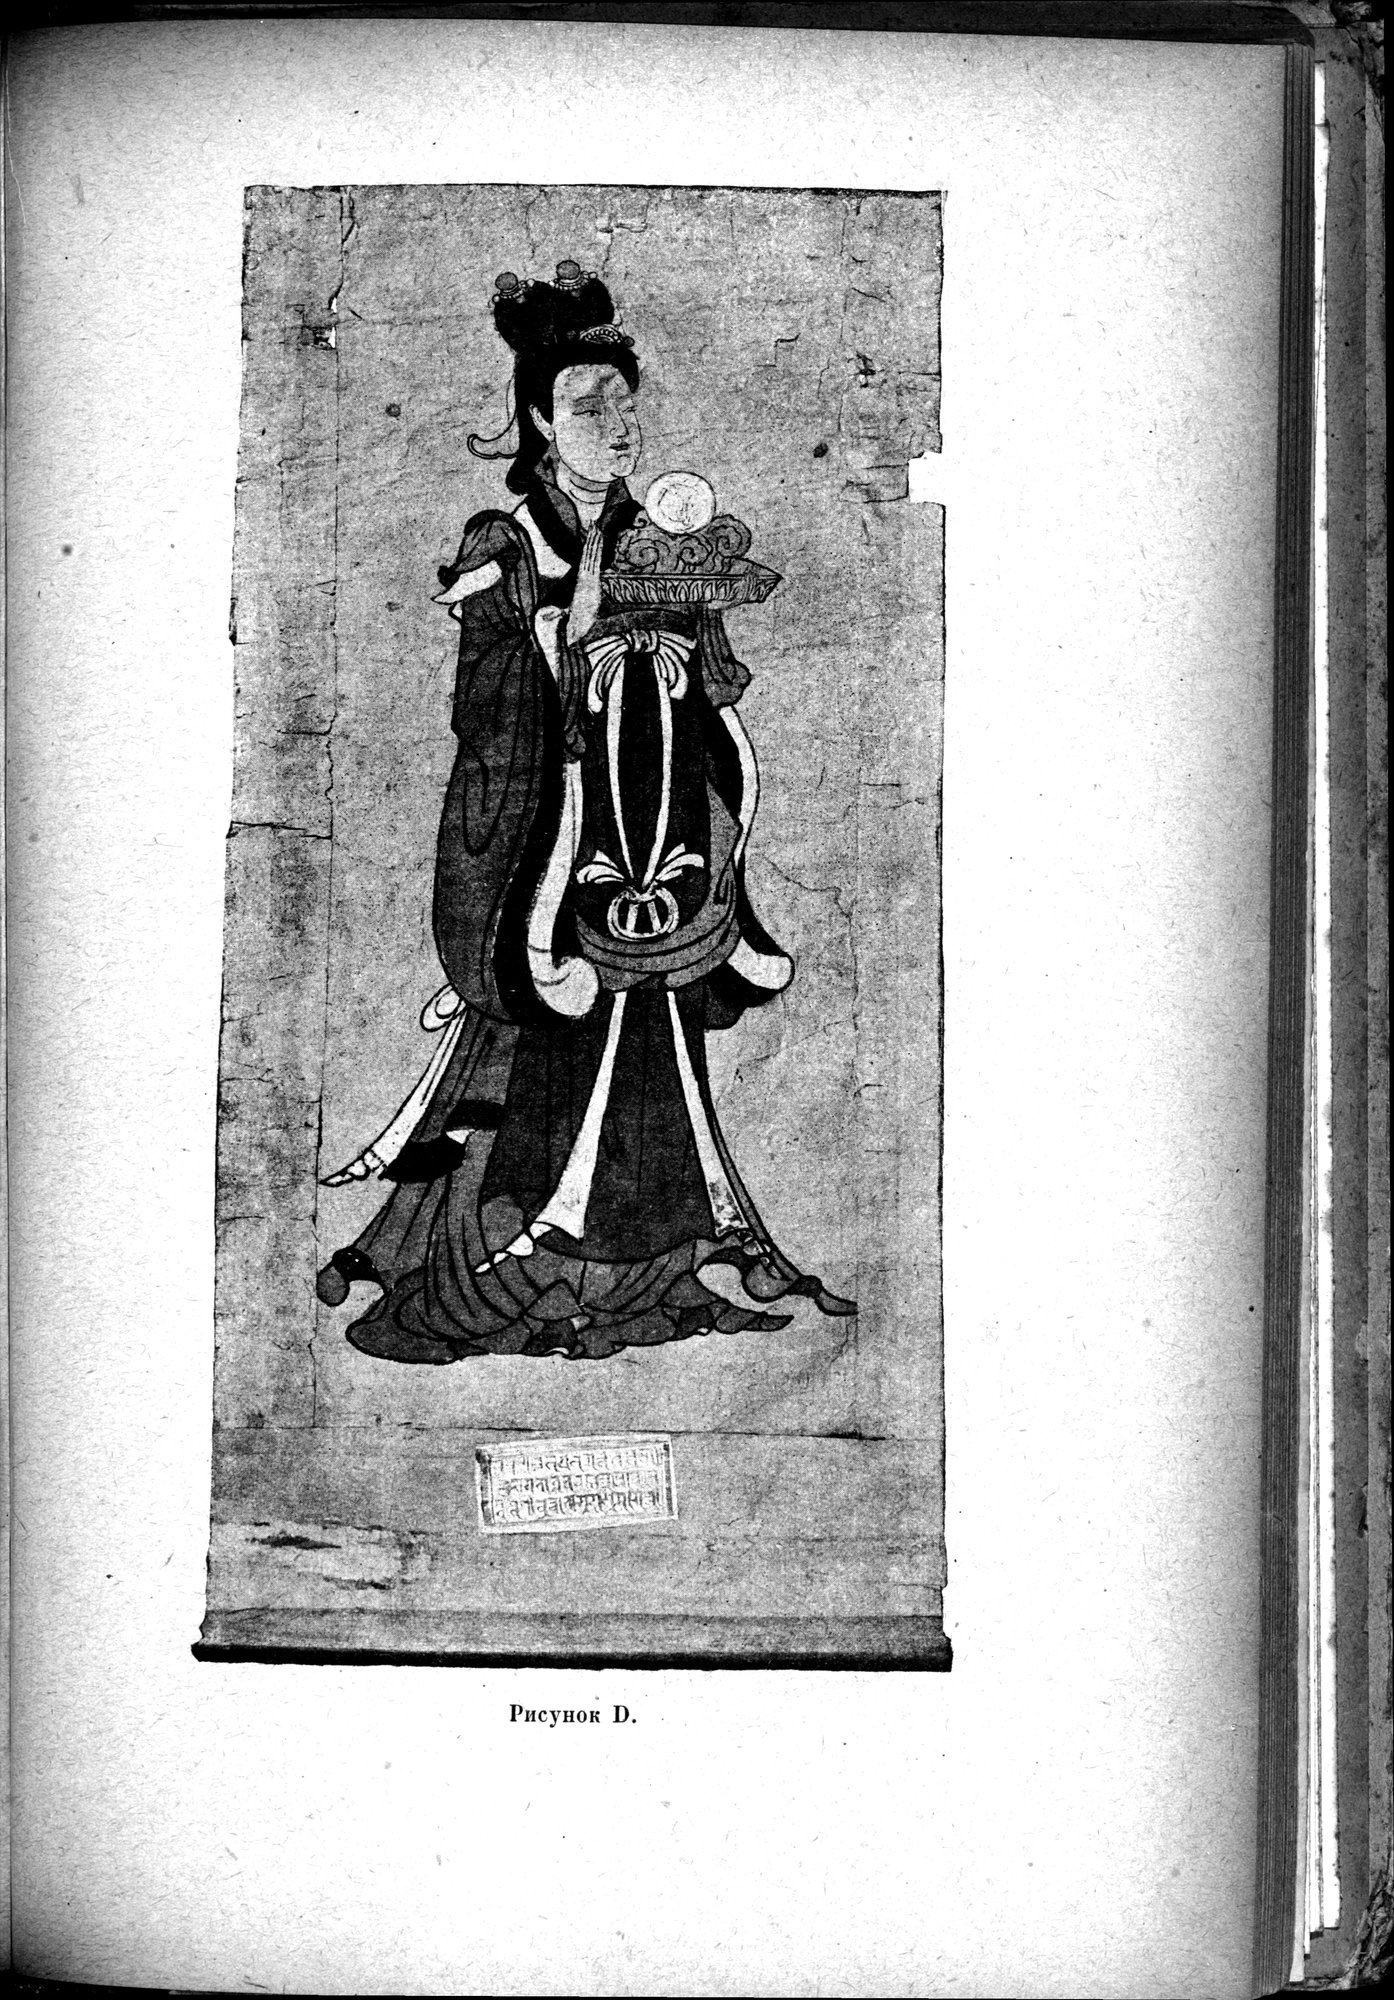 Mongoliya i Amdo i mertby gorod Khara-Khoto : vol.1 / Page 705 (Grayscale High Resolution Image)